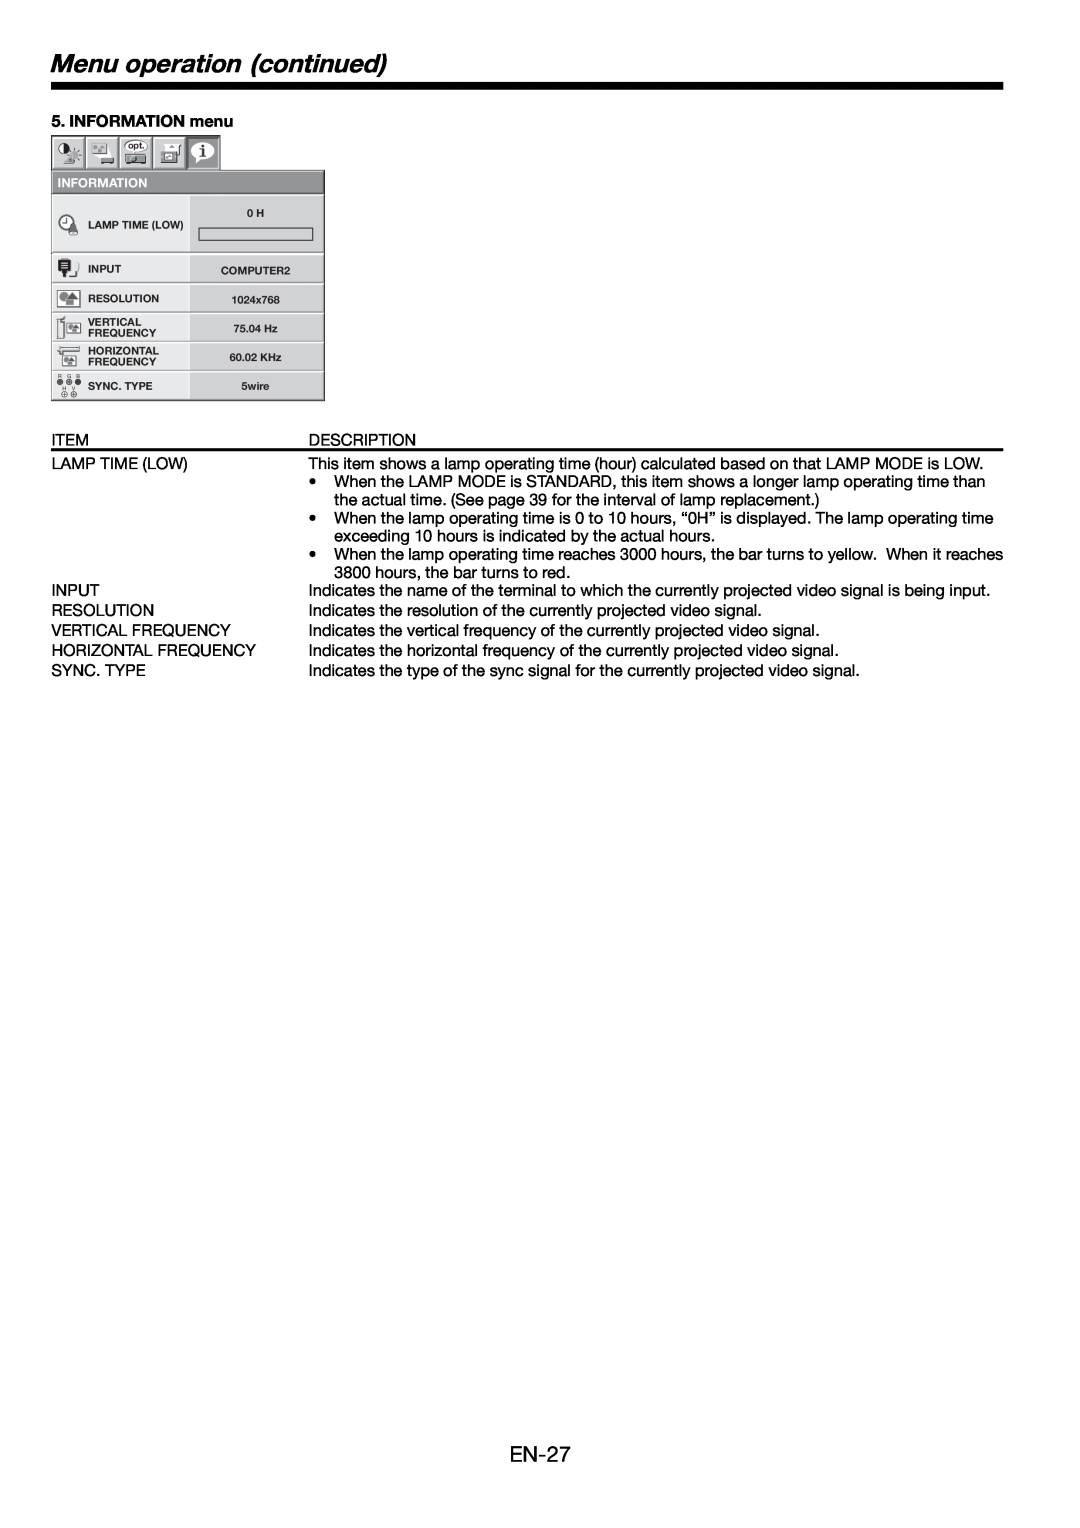 Mitsumi electronic HD8000 user manual Menu operation continued, EN-27, INFORMATION menu 